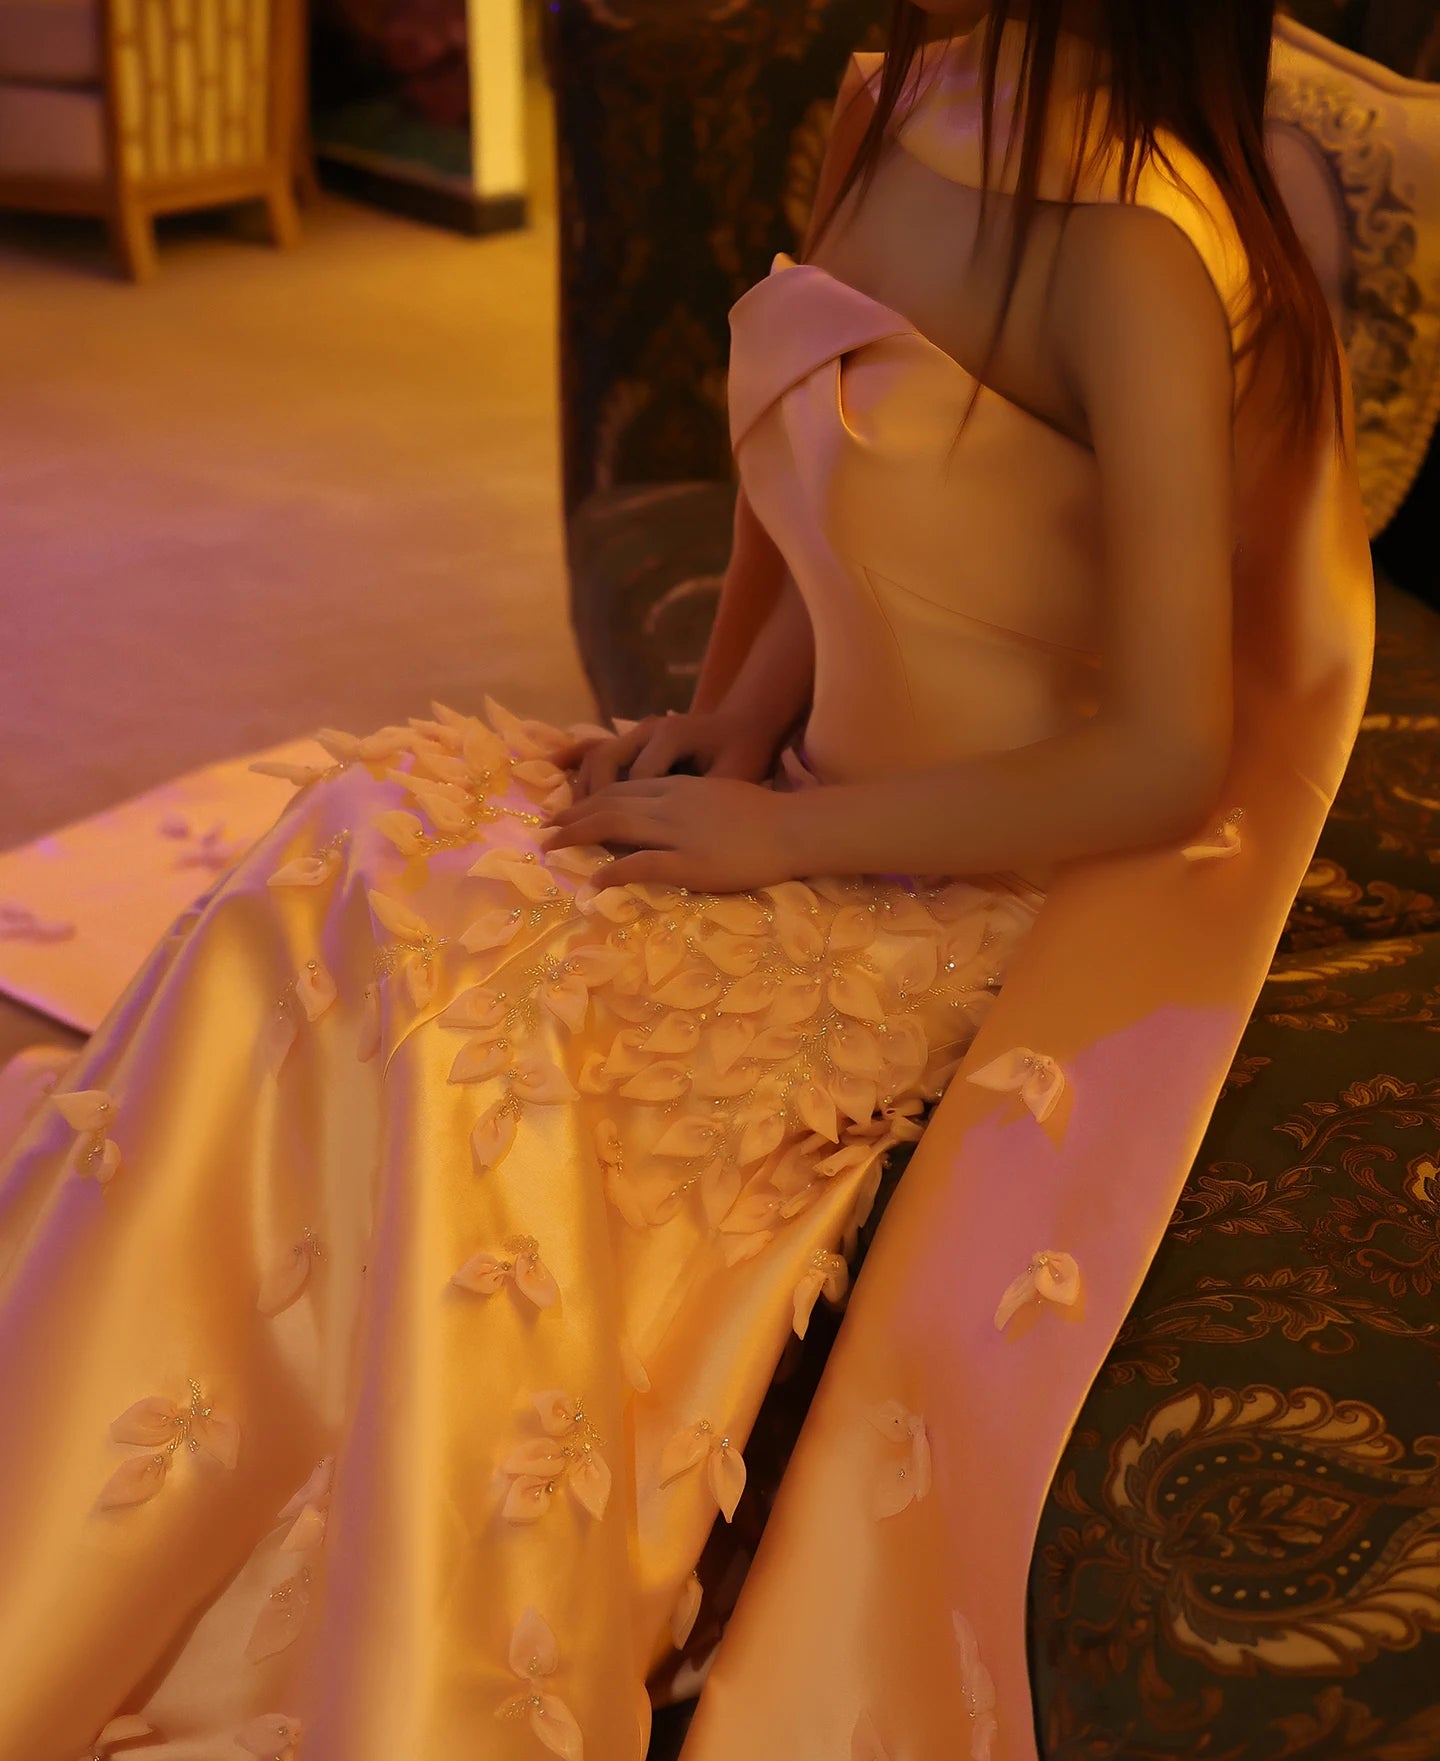 UU-Sharon Said Luxury 3D Leaves Blush Pink Satin Mermaid Evening Dress with Cape Dubai Arabic Women Wedding Prom Party Gowns